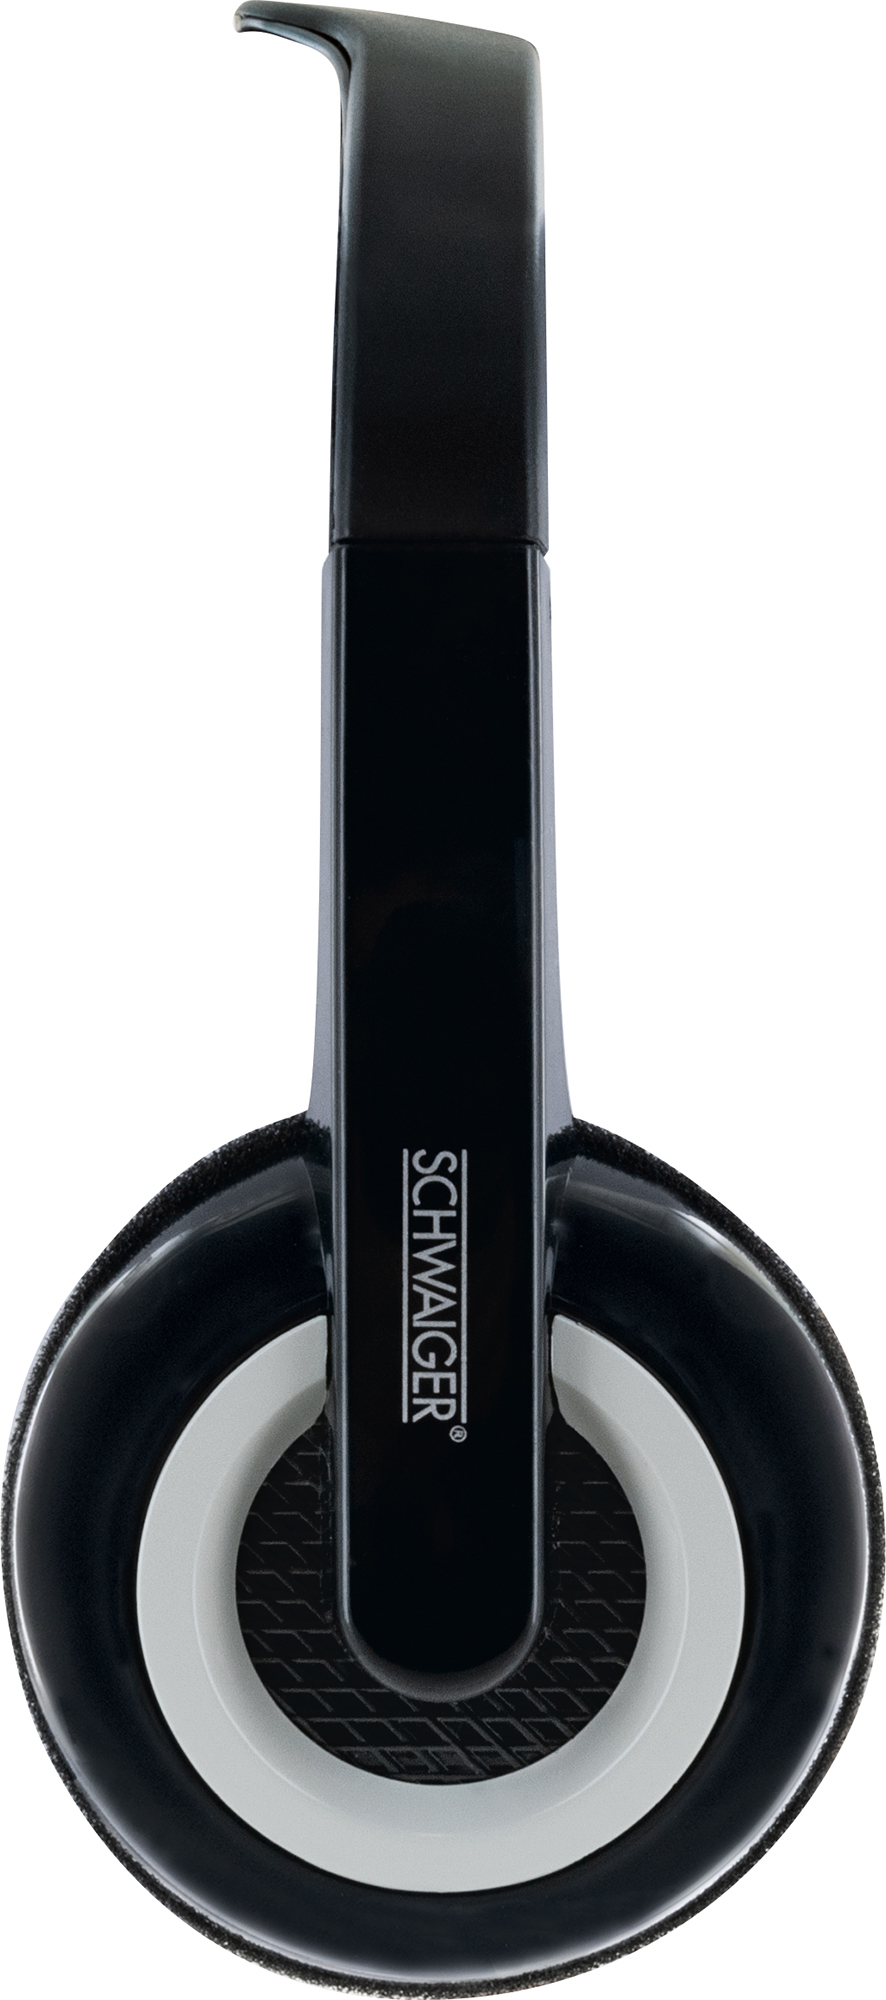 SCHWAIGER -HS1000 013-, Headset schwarz On-ear PC